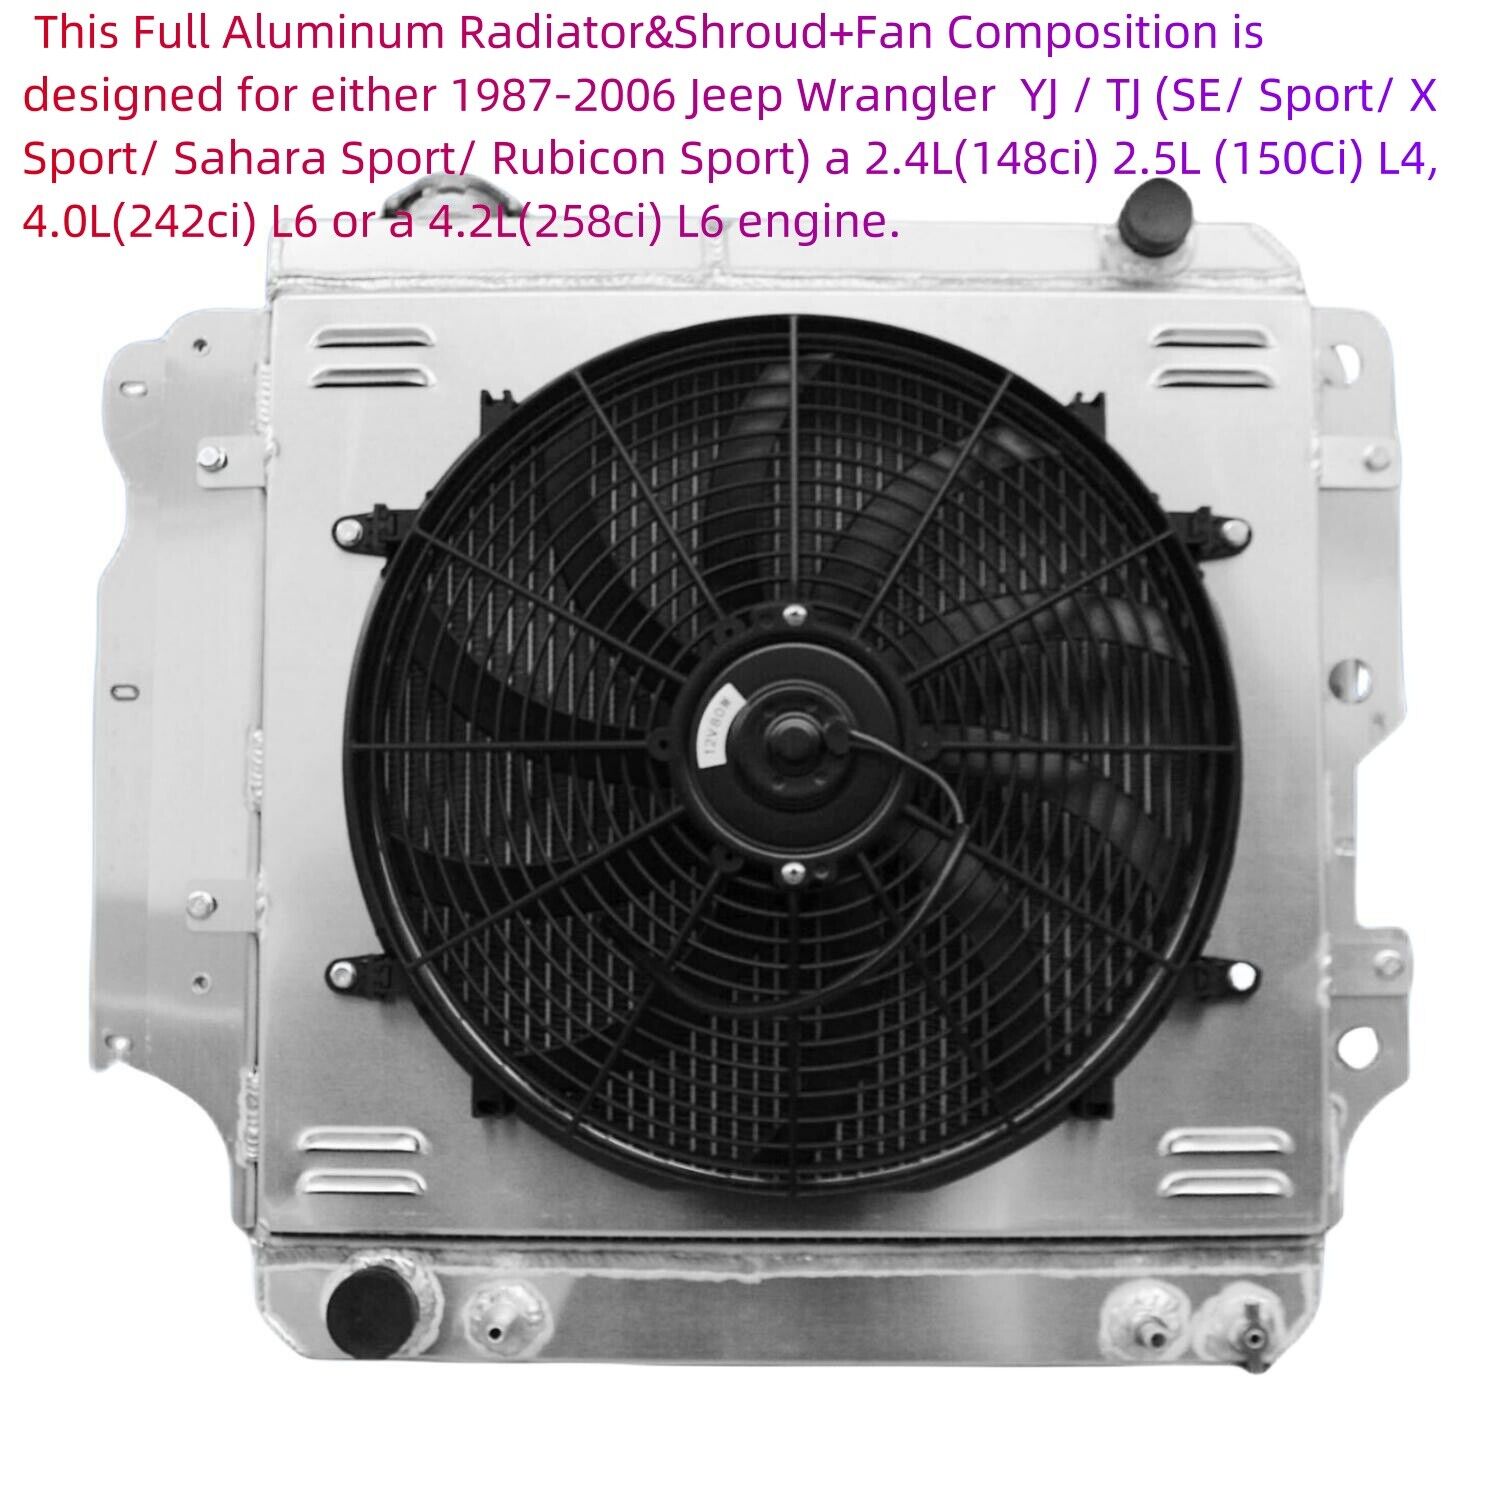 CC2101 3Row Aluminum Radiator+Fan Shroud For 1987-2006 Jeep Wrangler,TJ,YJ,L4,L6